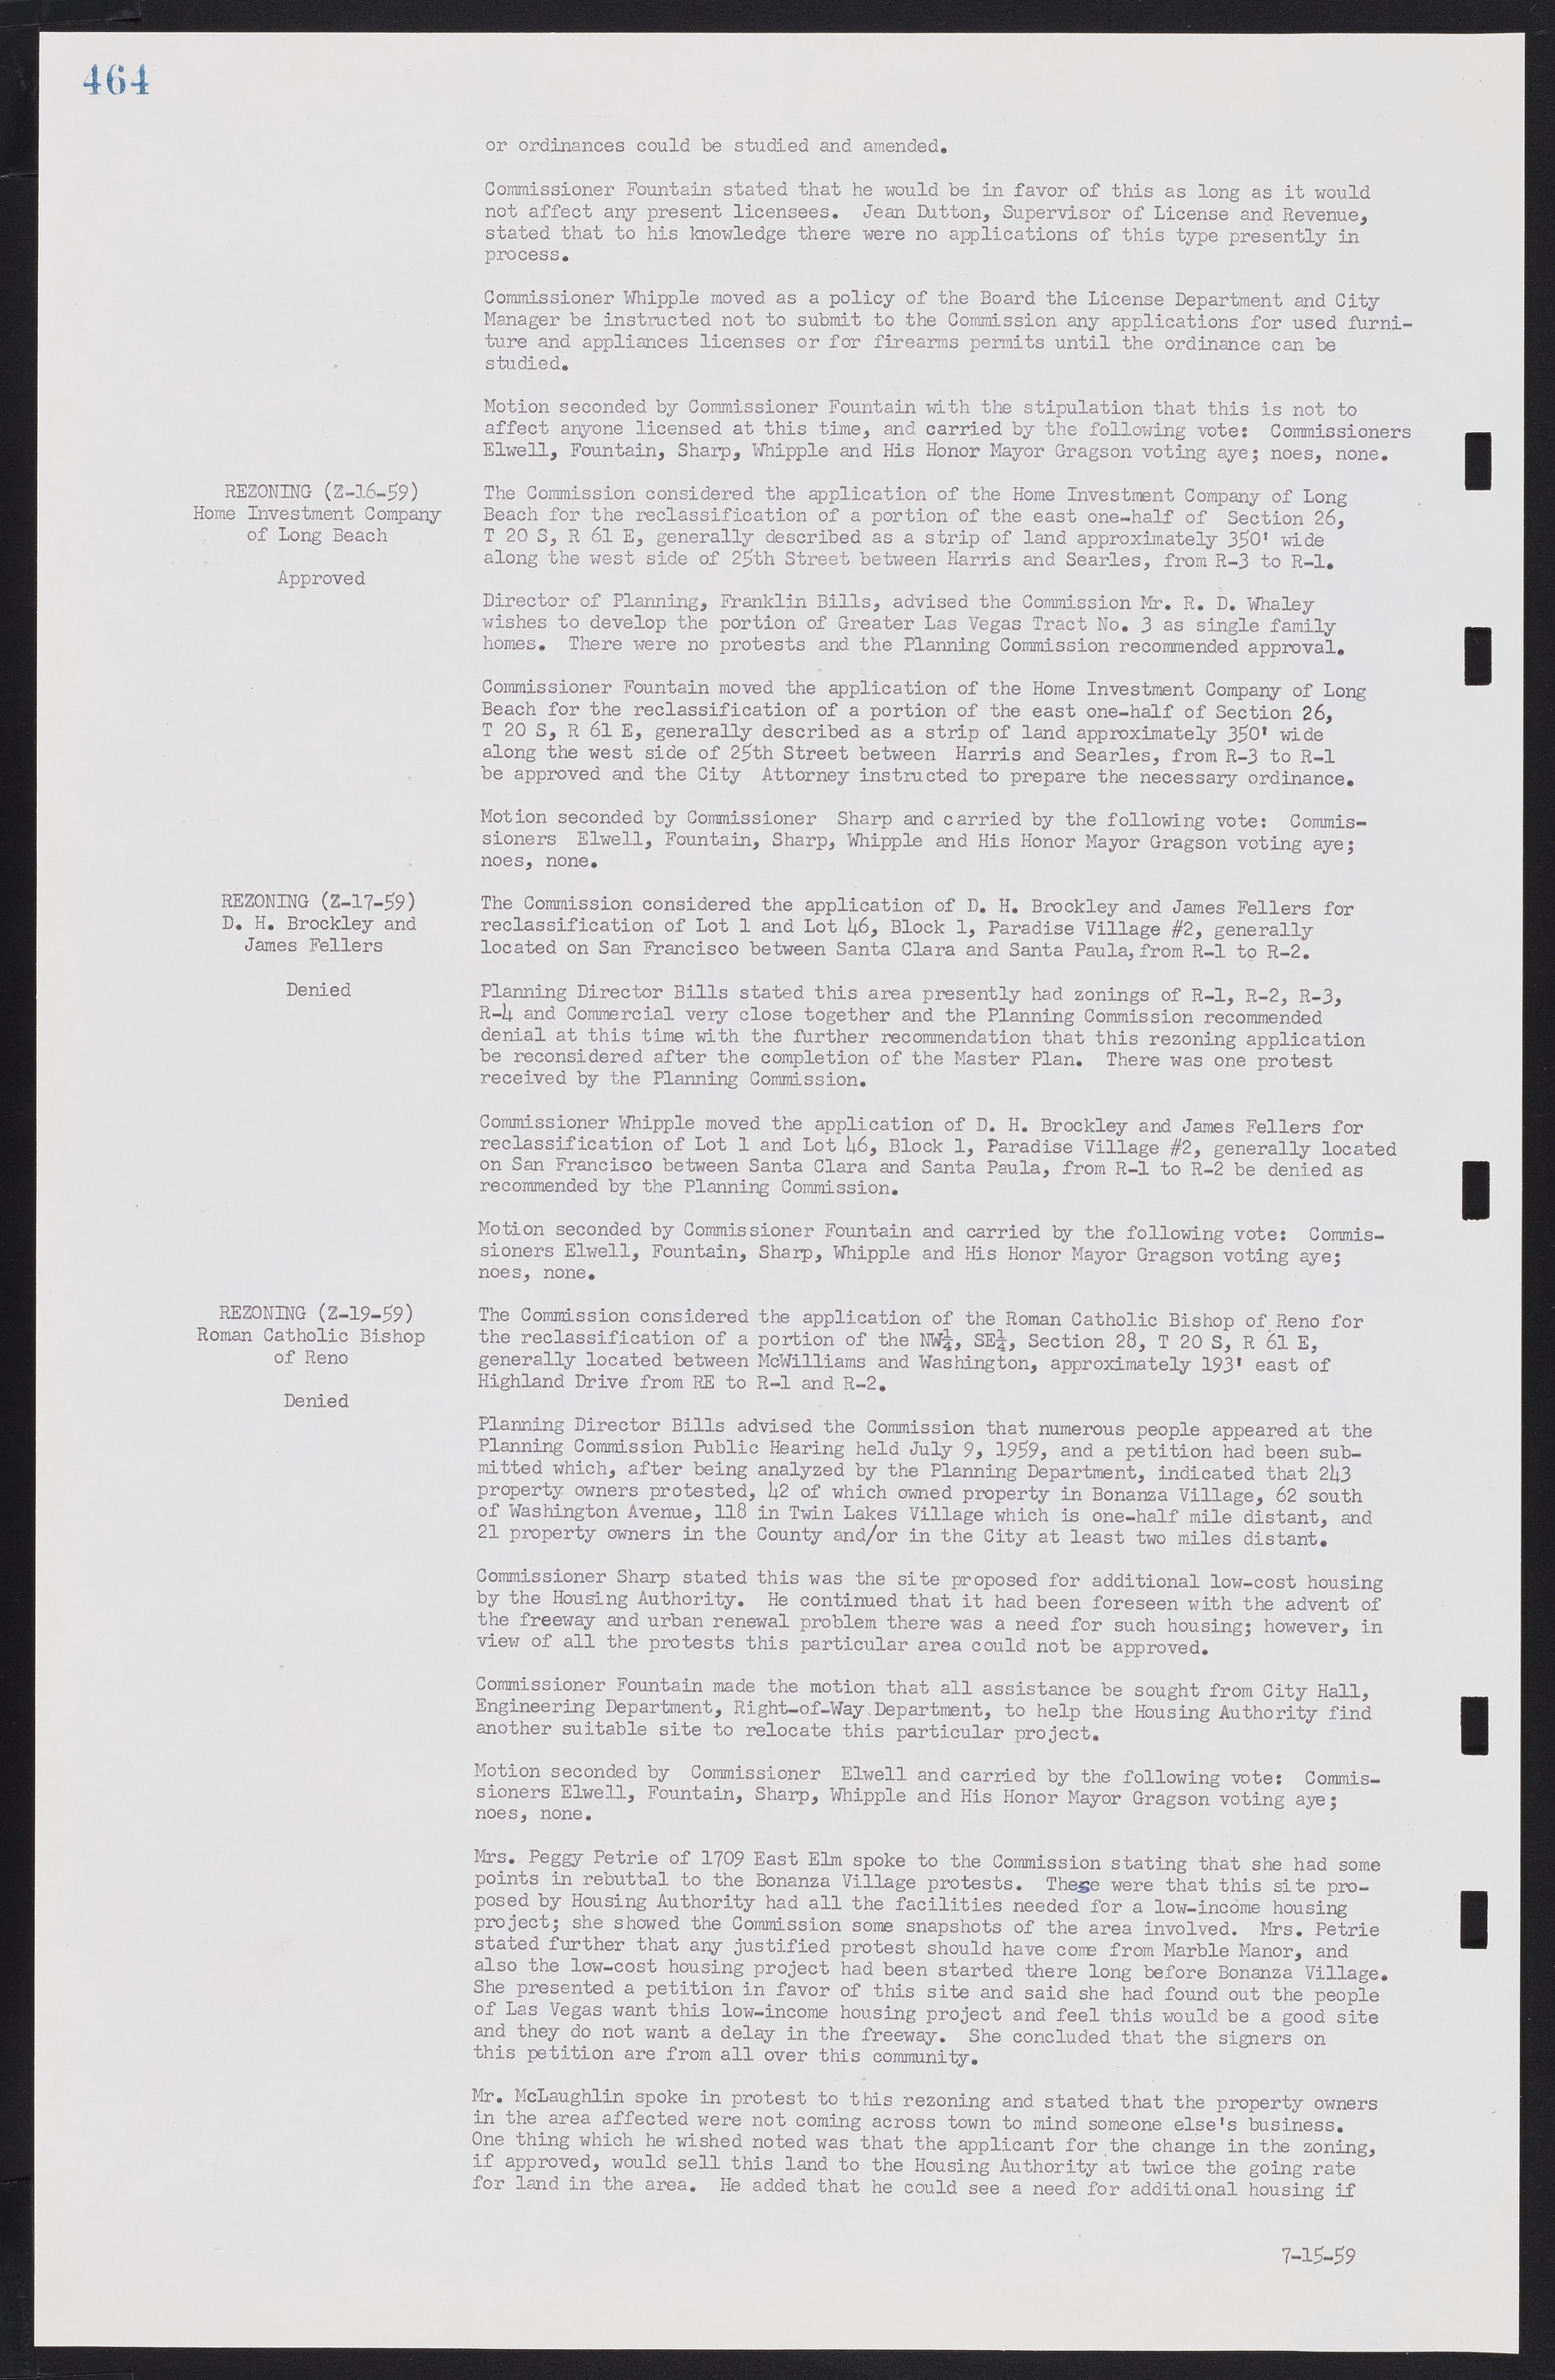 Las Vegas City Commission Minutes, November 20, 1957 to December 2, 1959, lvc000011-500